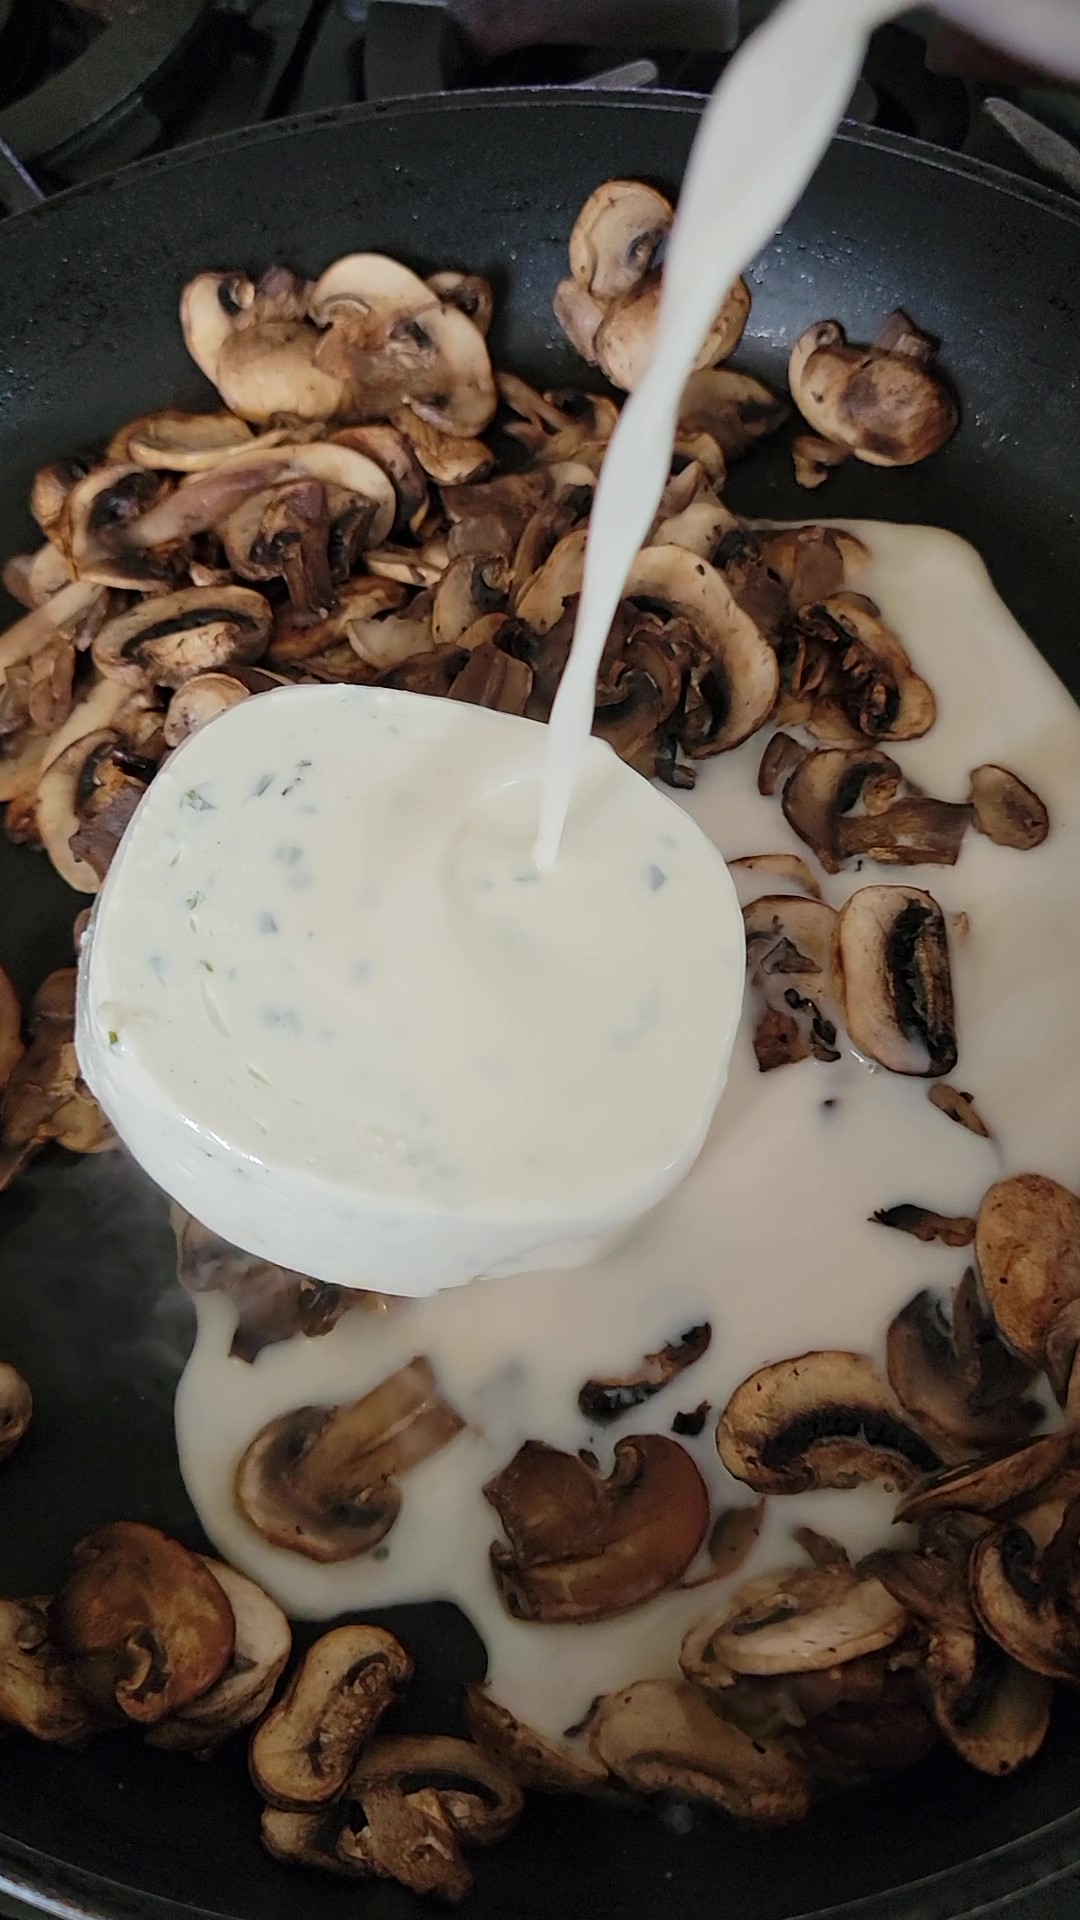 Adding almond milk to the vegan chive cream cheese and sautéed mushrooms.